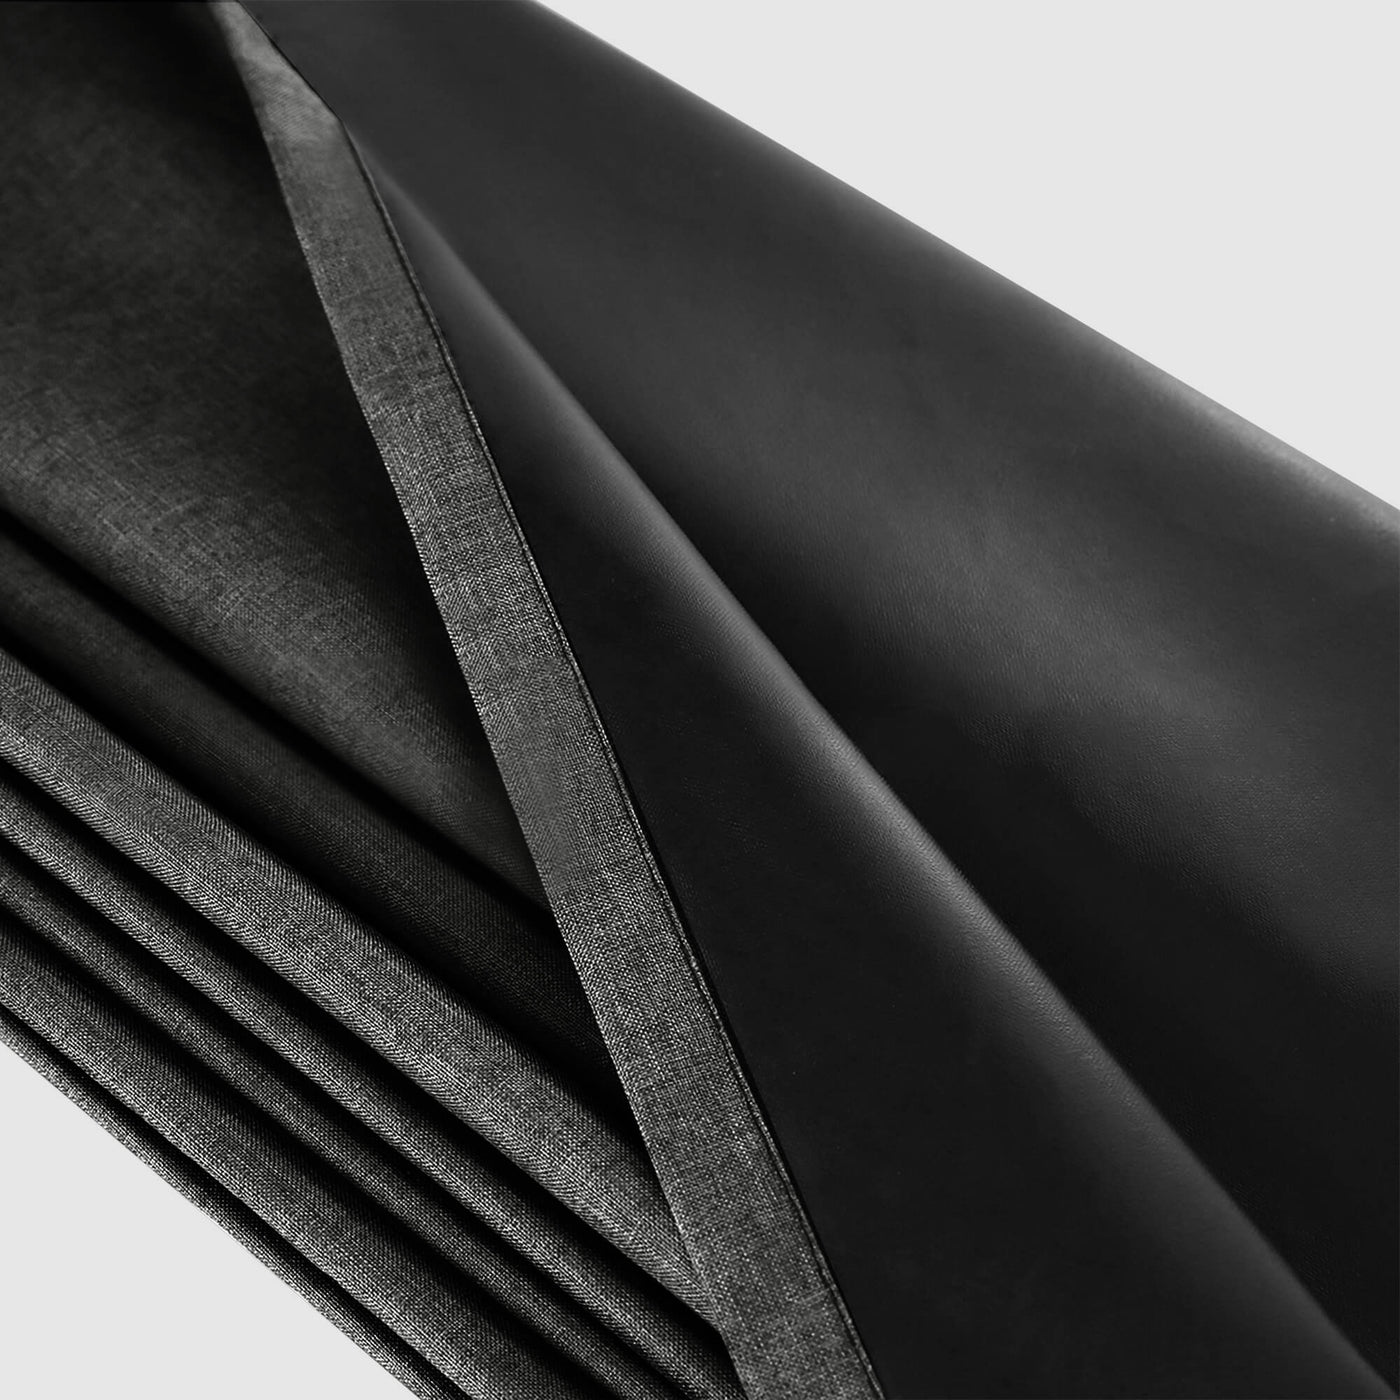 Heartcosy Blackout Curtains Dark Grey - Grommet Top & Bottom